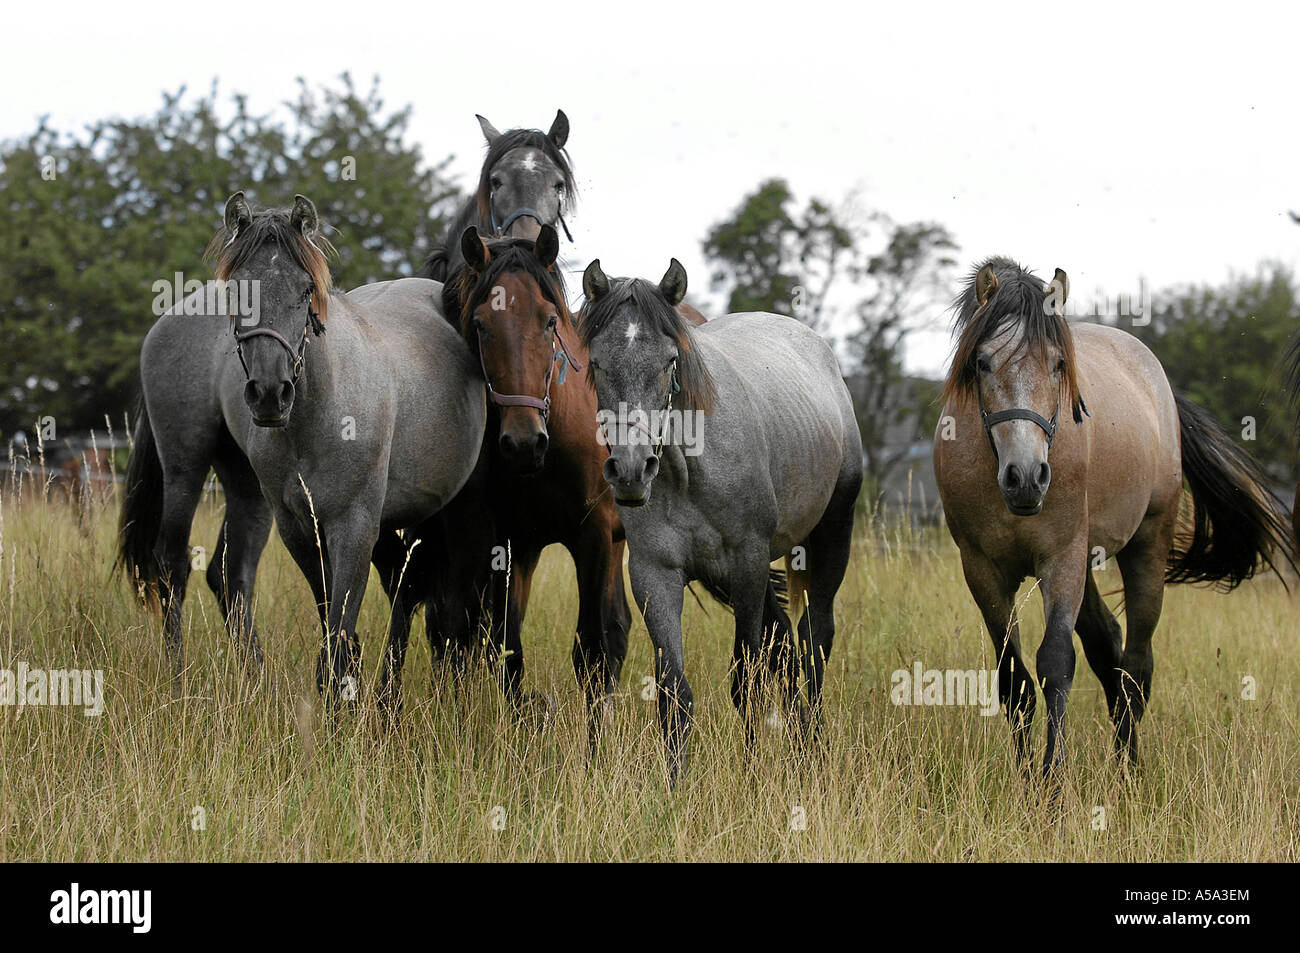 Pura Raza Espanola Andalusier Andalusian Horse Stock Photo